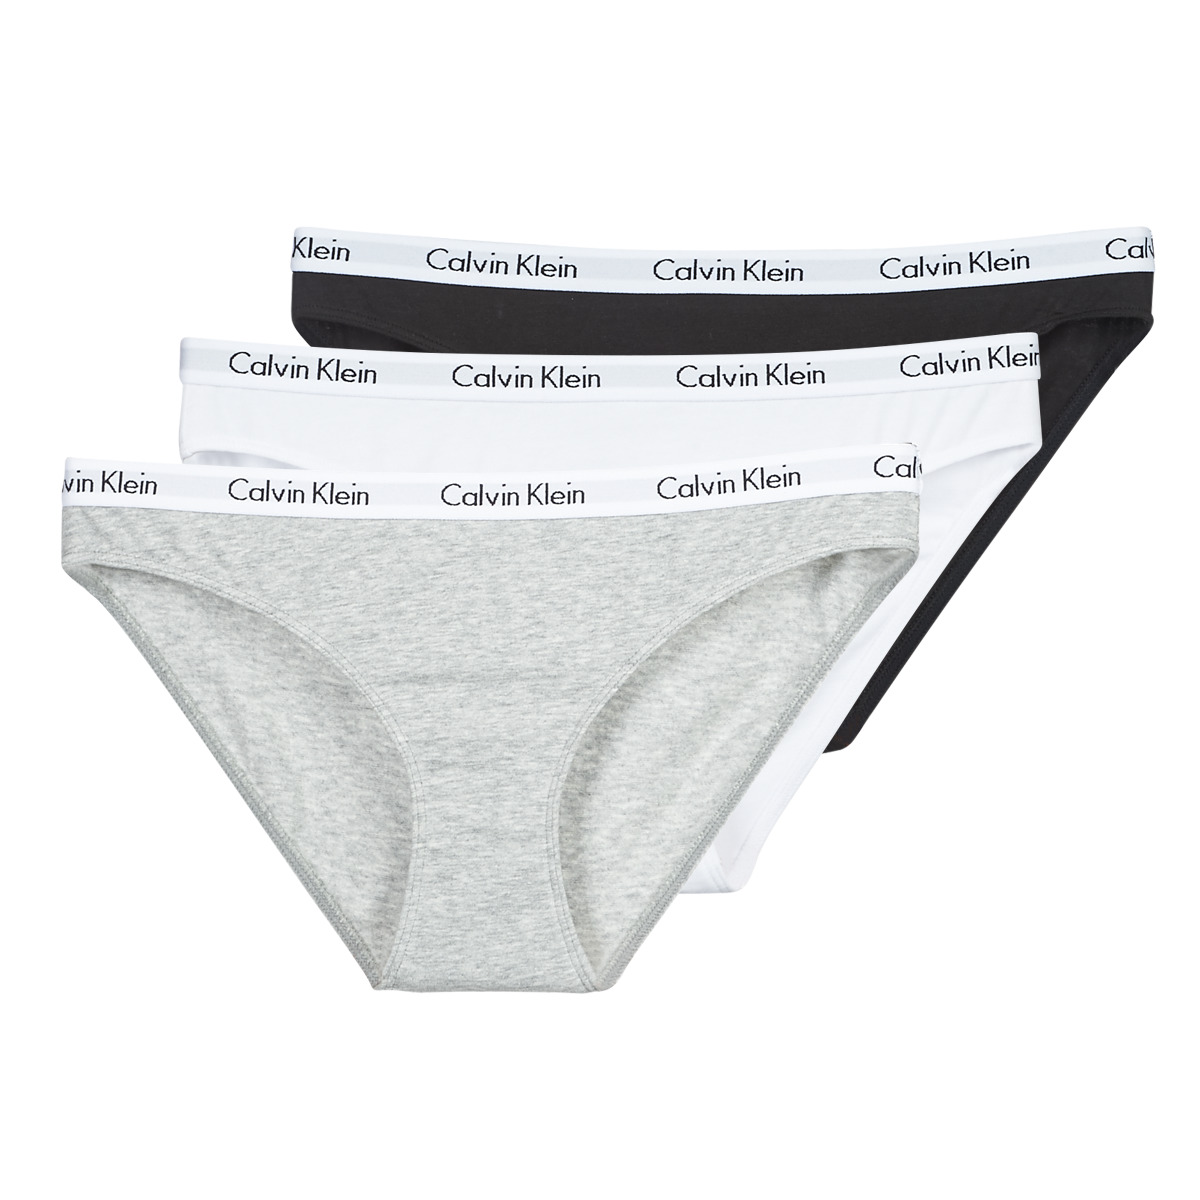 Calvin Klein Jeans CAROUSEL X Sort / Hvid / Grå / Marmoreret - Undertøj Trusser Kr